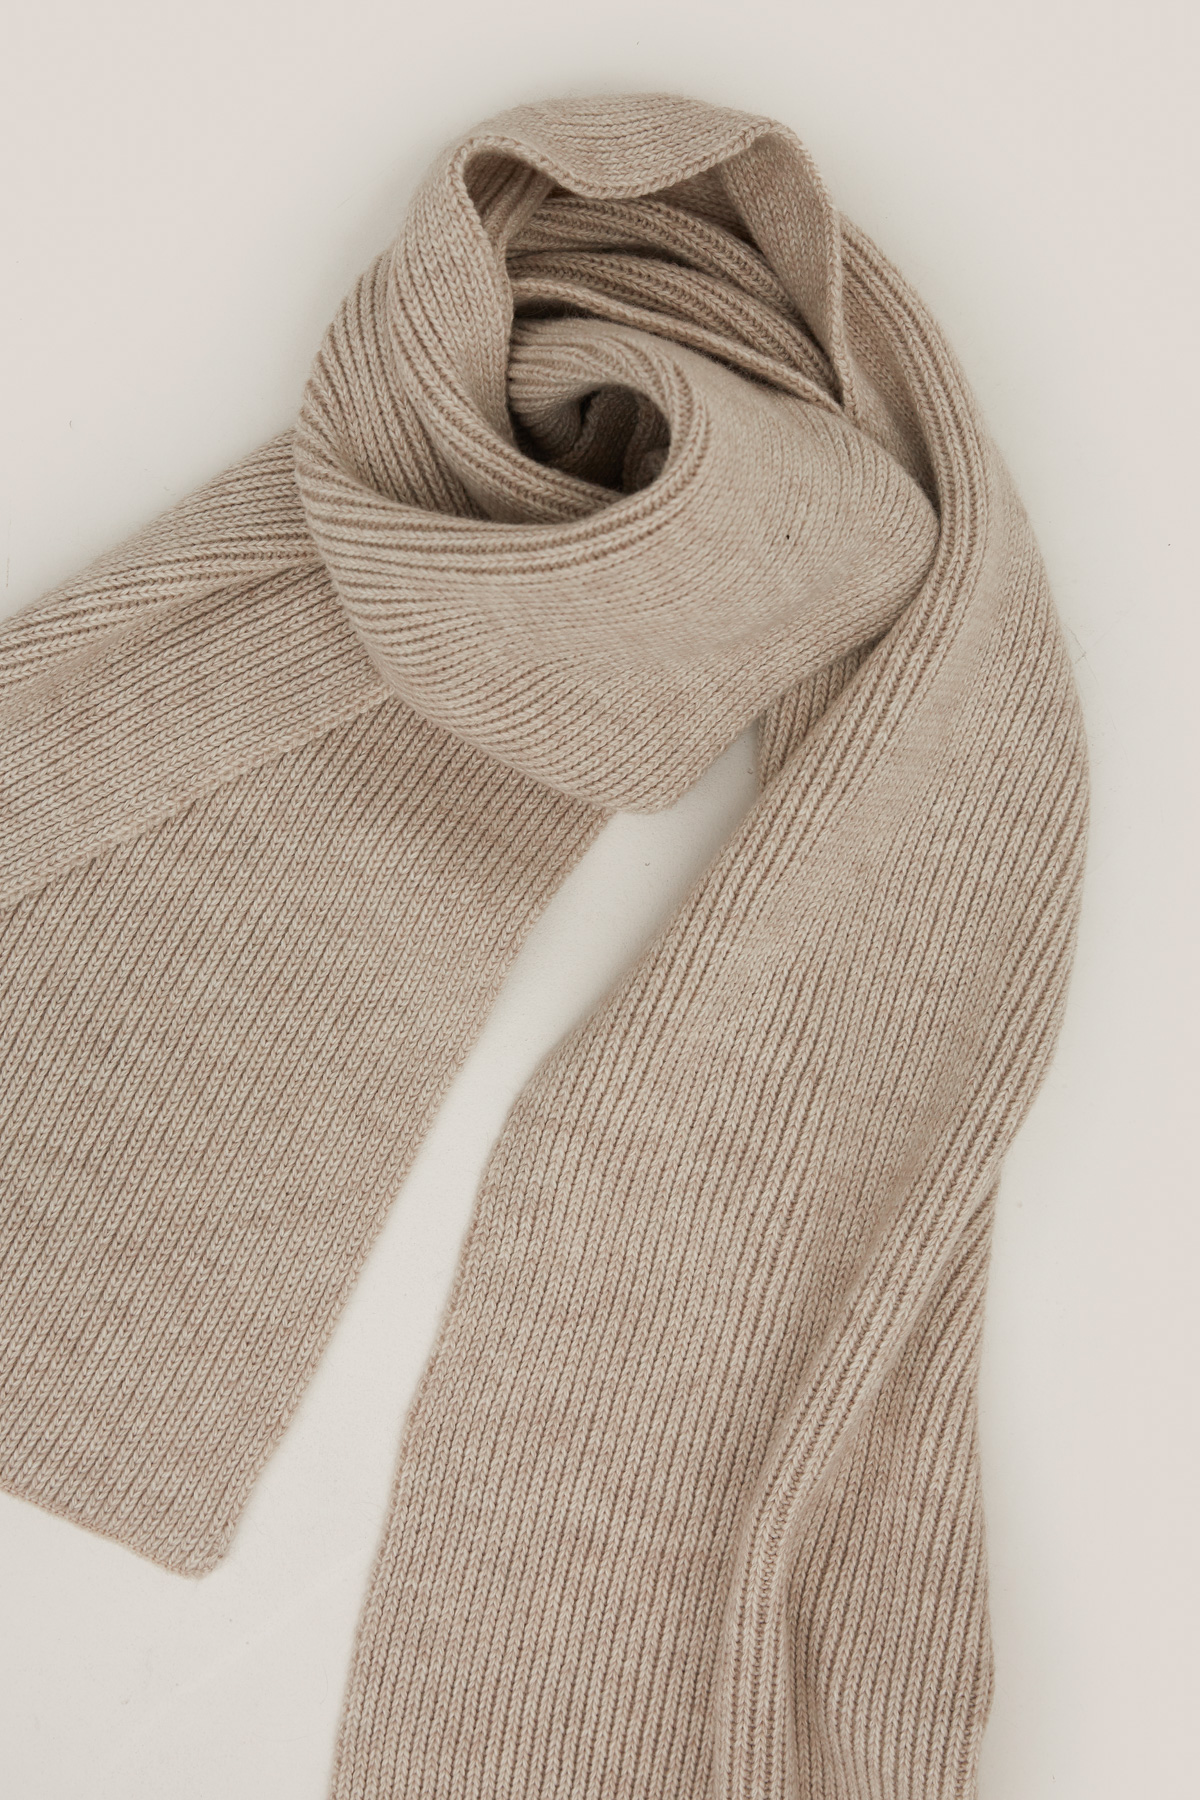 Knitted woolen light beige scarf, photo 1